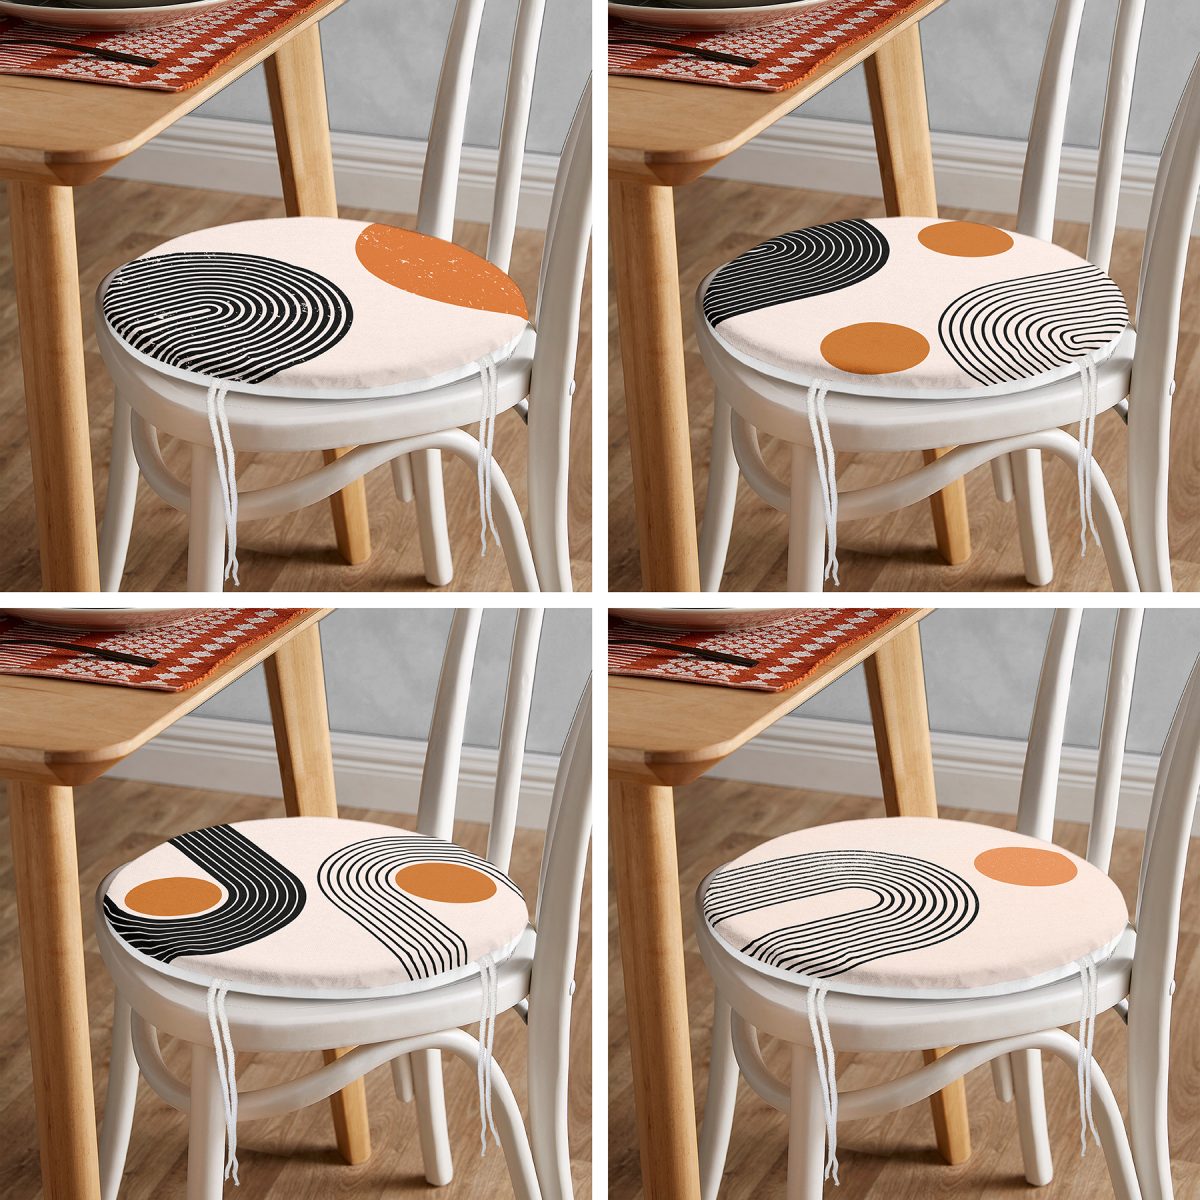 4'lü Minimalist Tasarımlı Modern Yuvarlak Fermuarlı Sandalye Minderi Seti Realhomes